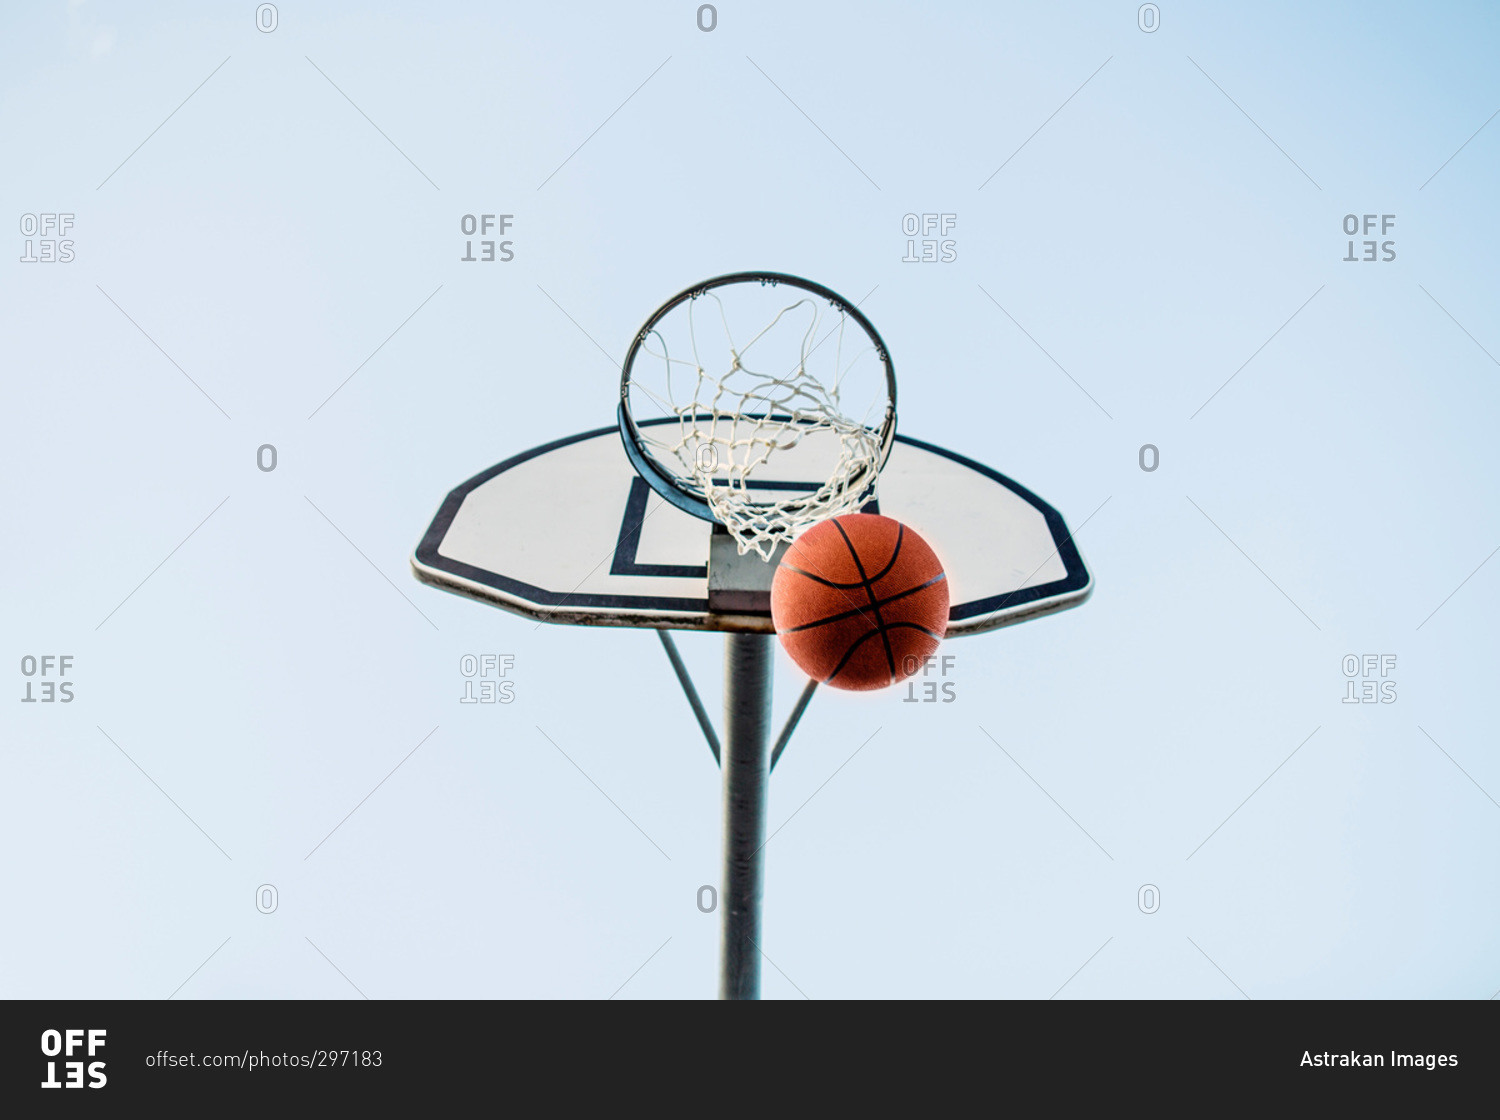 Basketball making a basket through the hoop